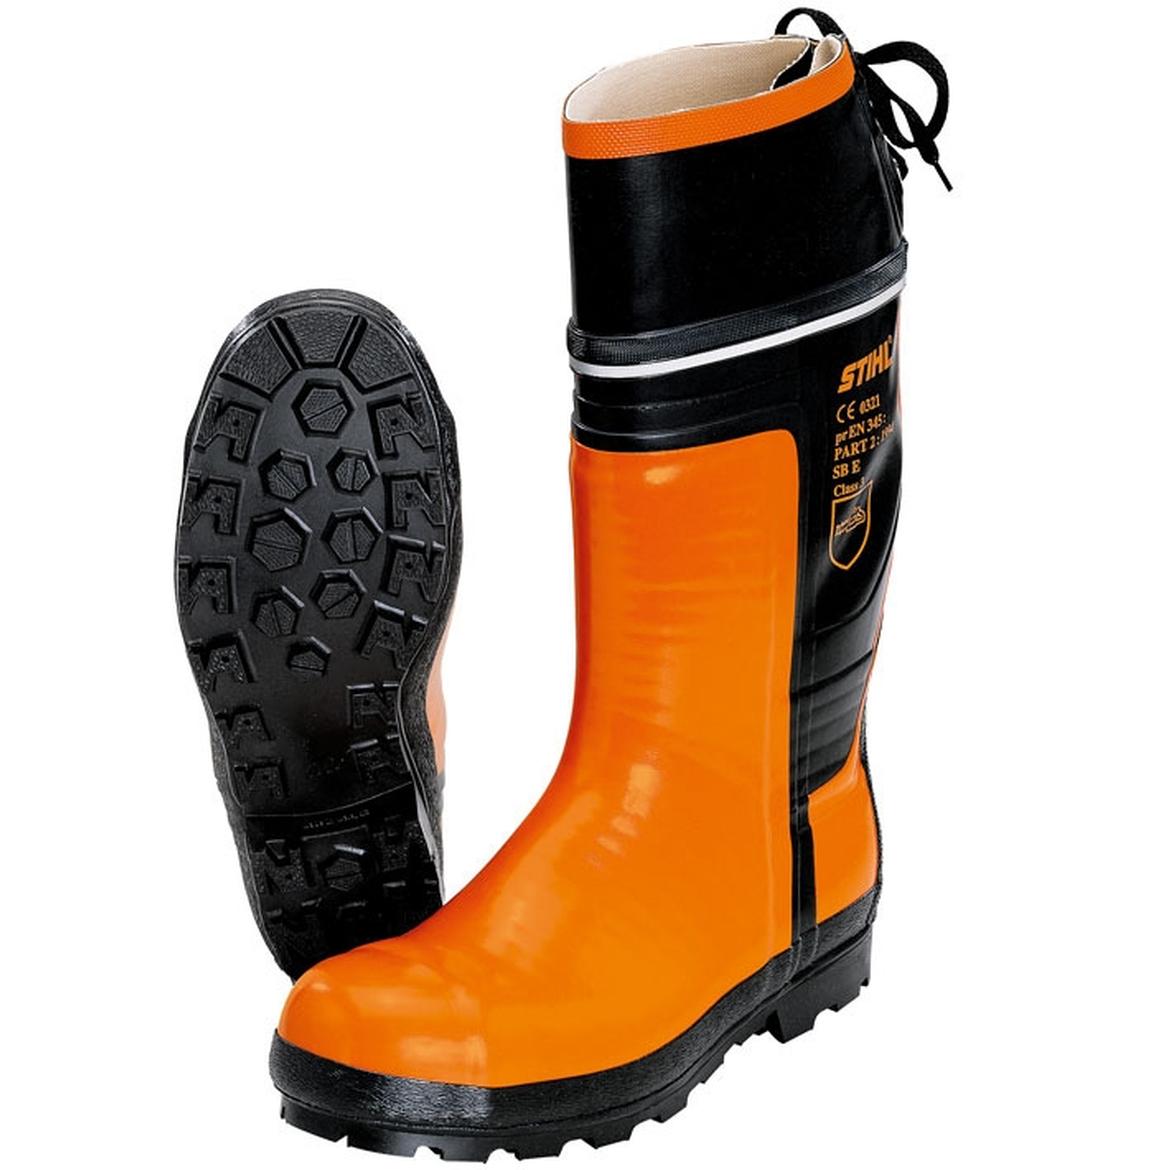 Stihl Chainsaw Kevlar Boots